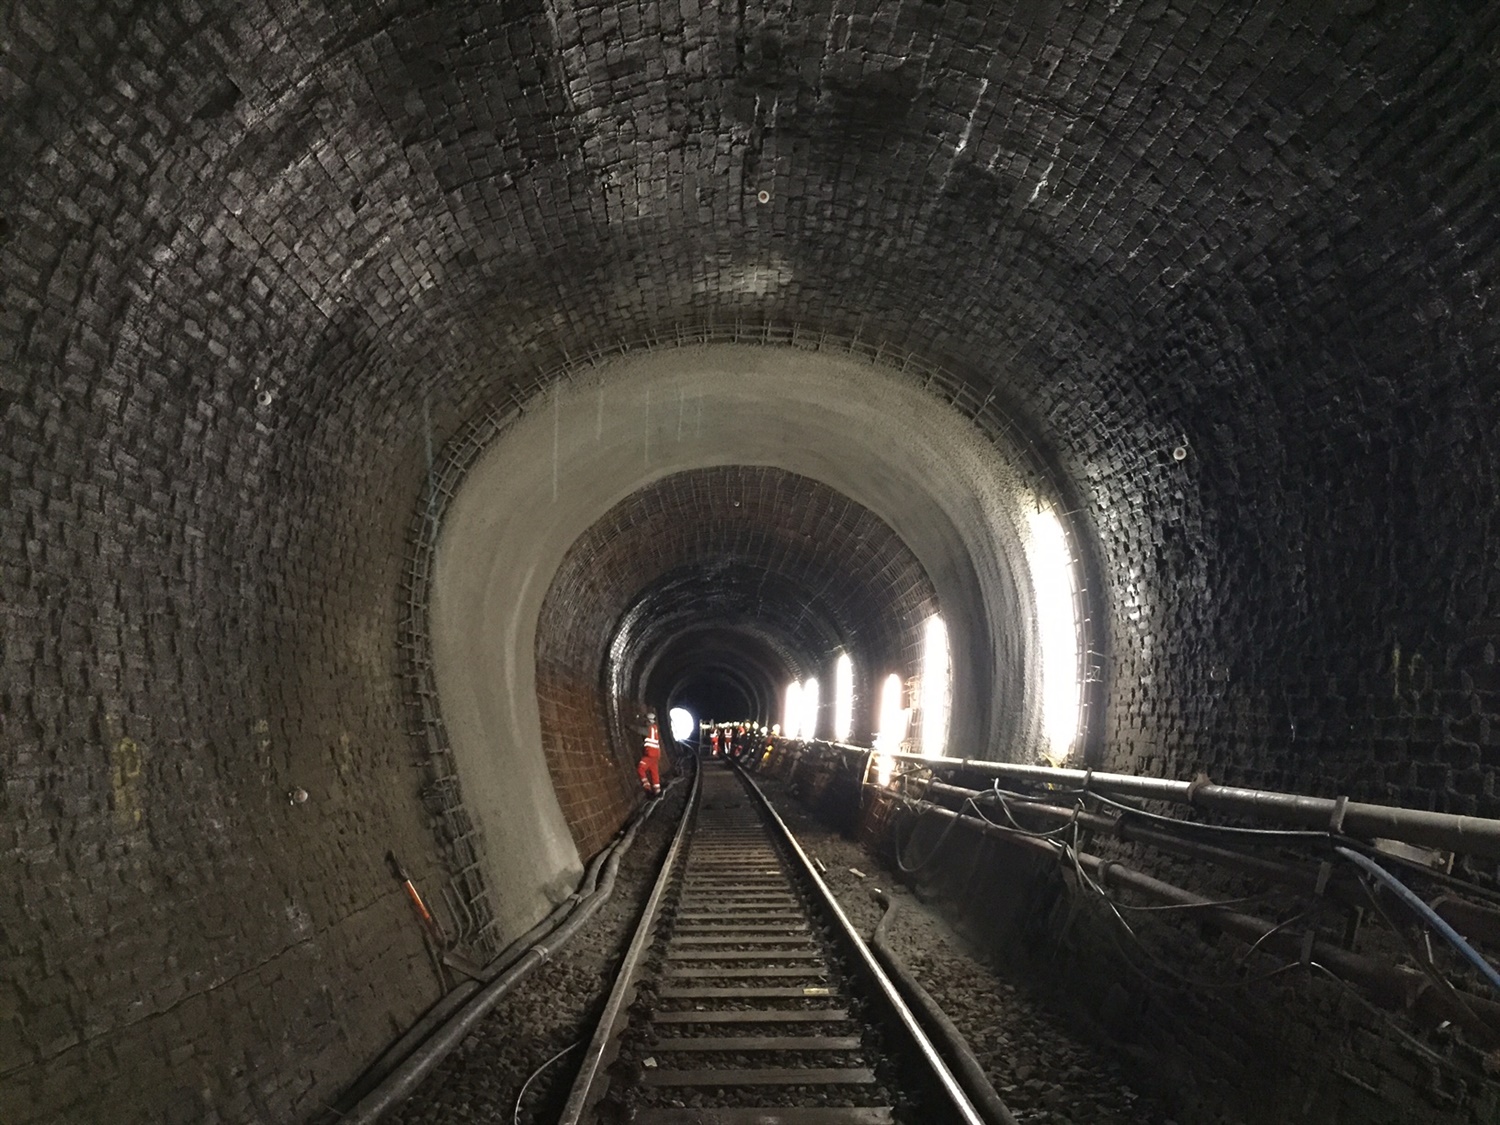 Farnworth Tunnel electrification work to start next week